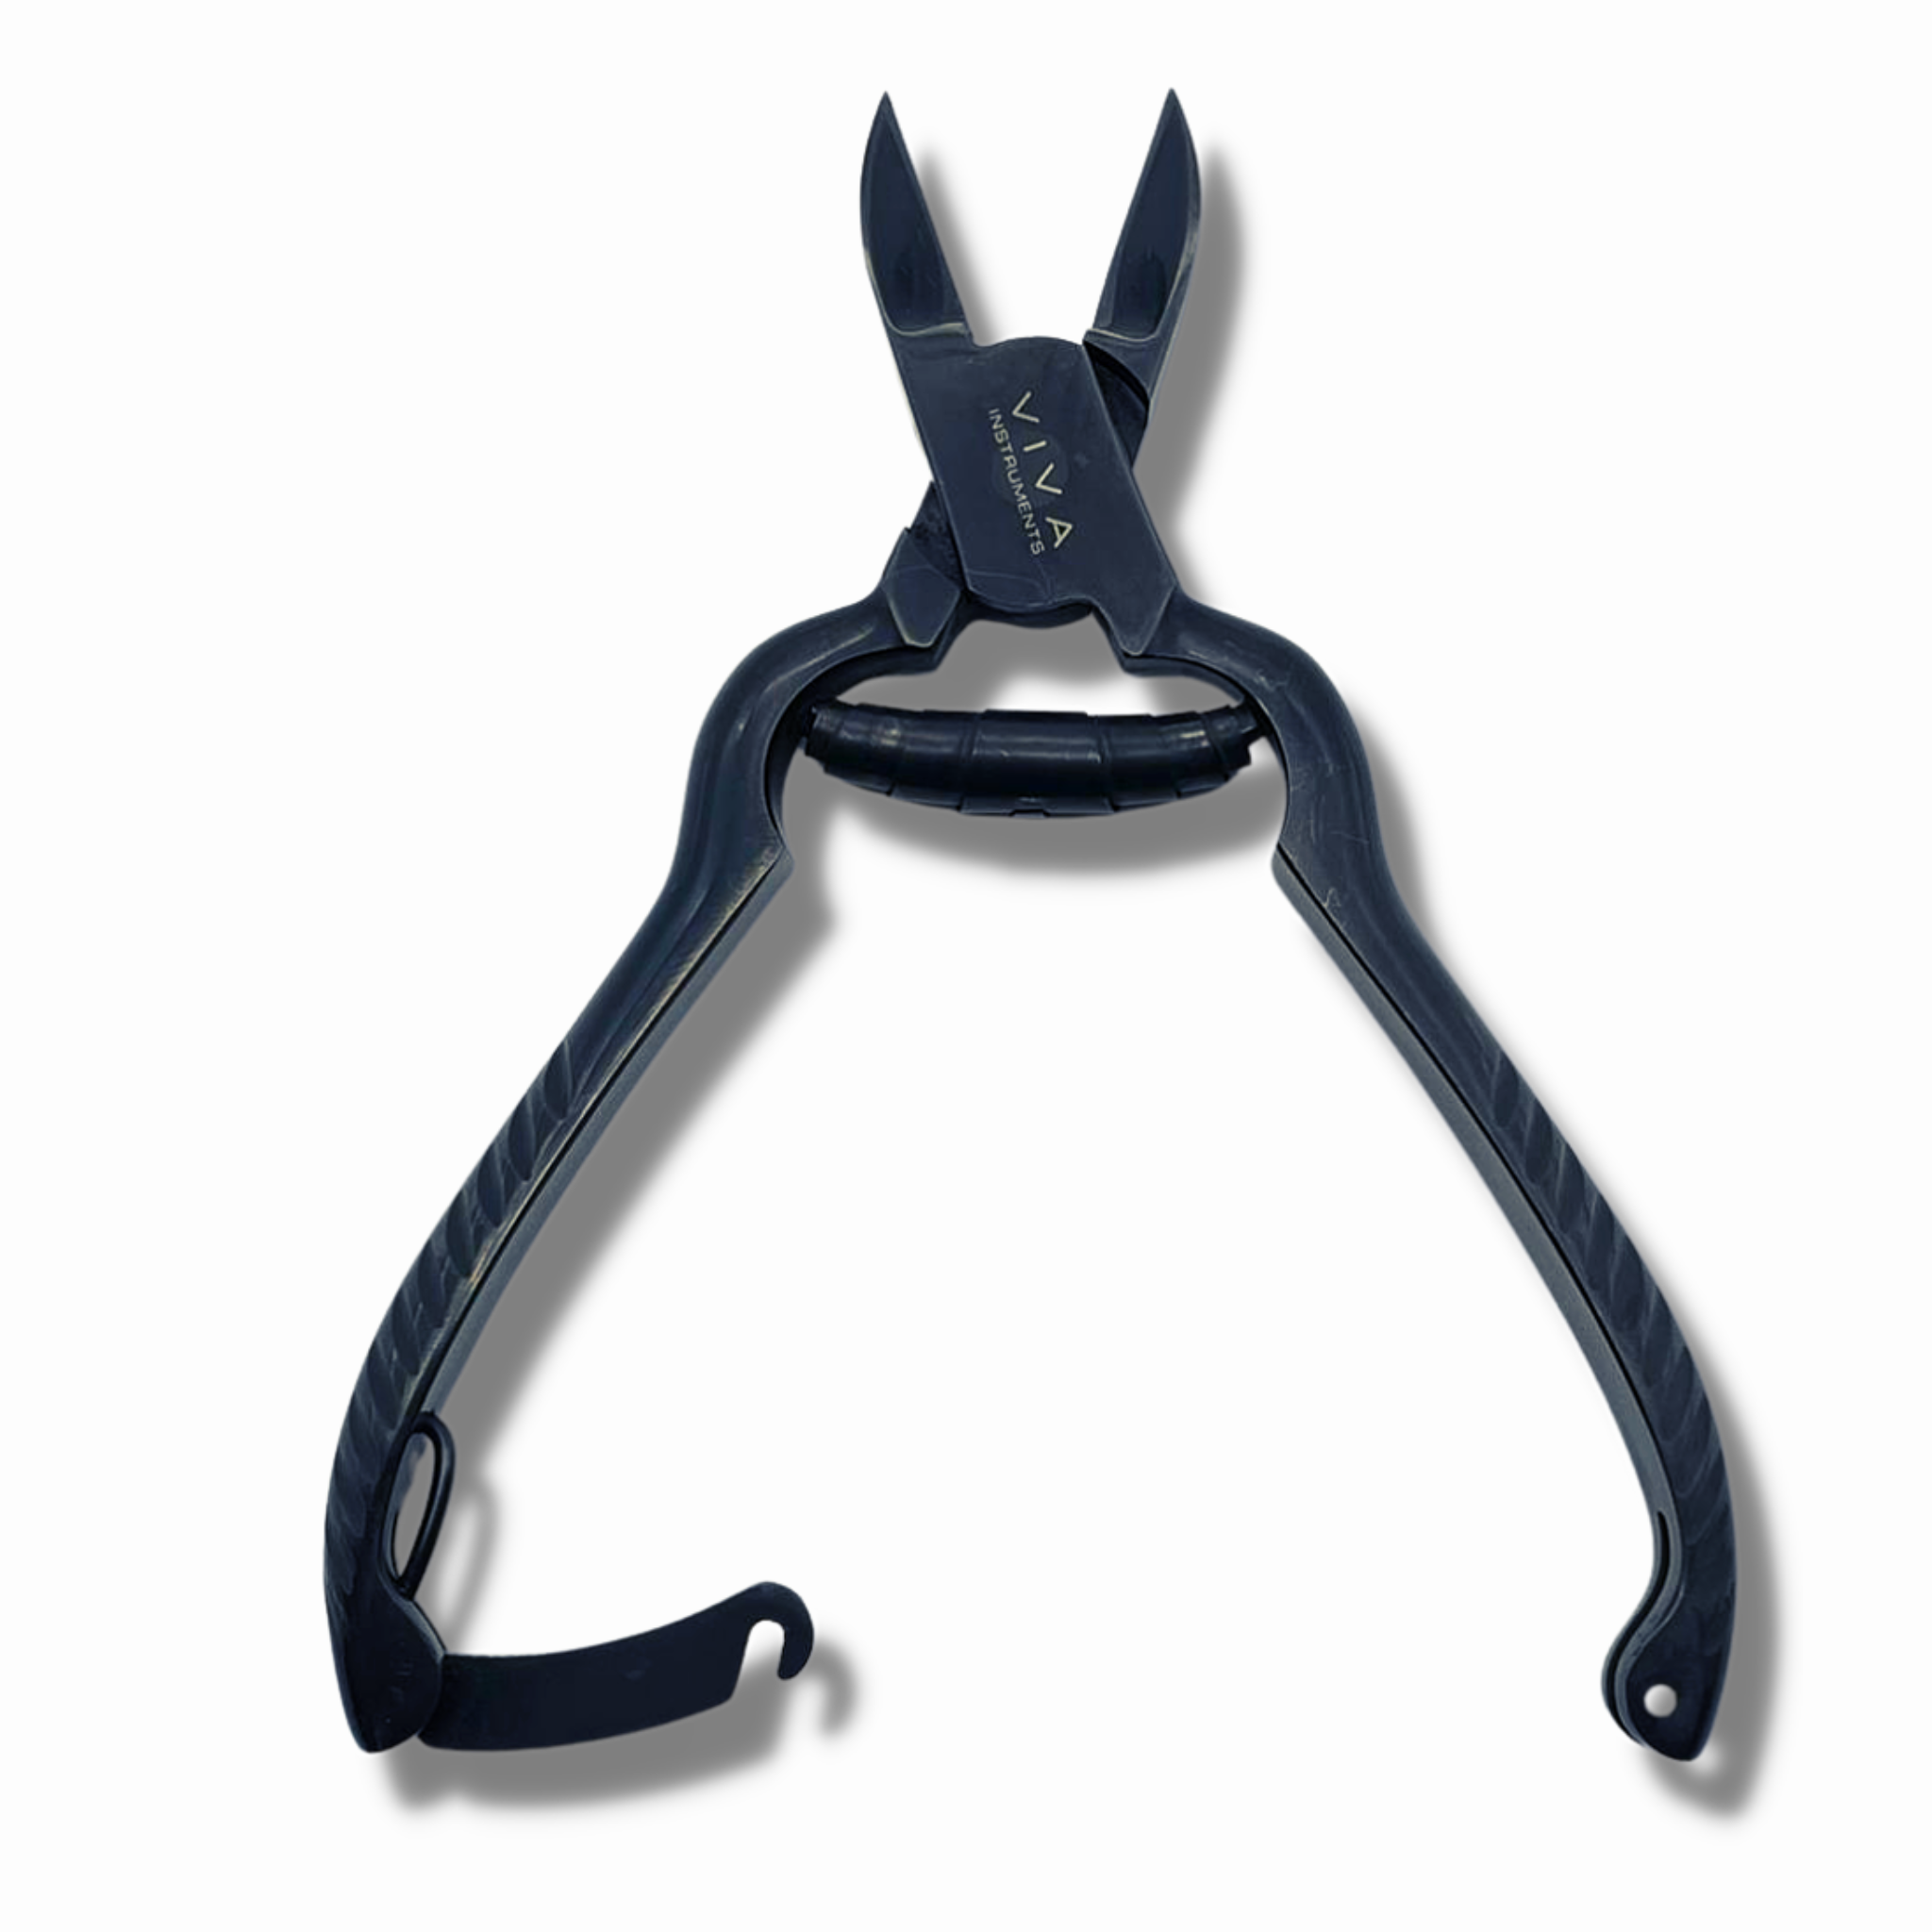 toenail clippers chiropodist tools - viva instruments